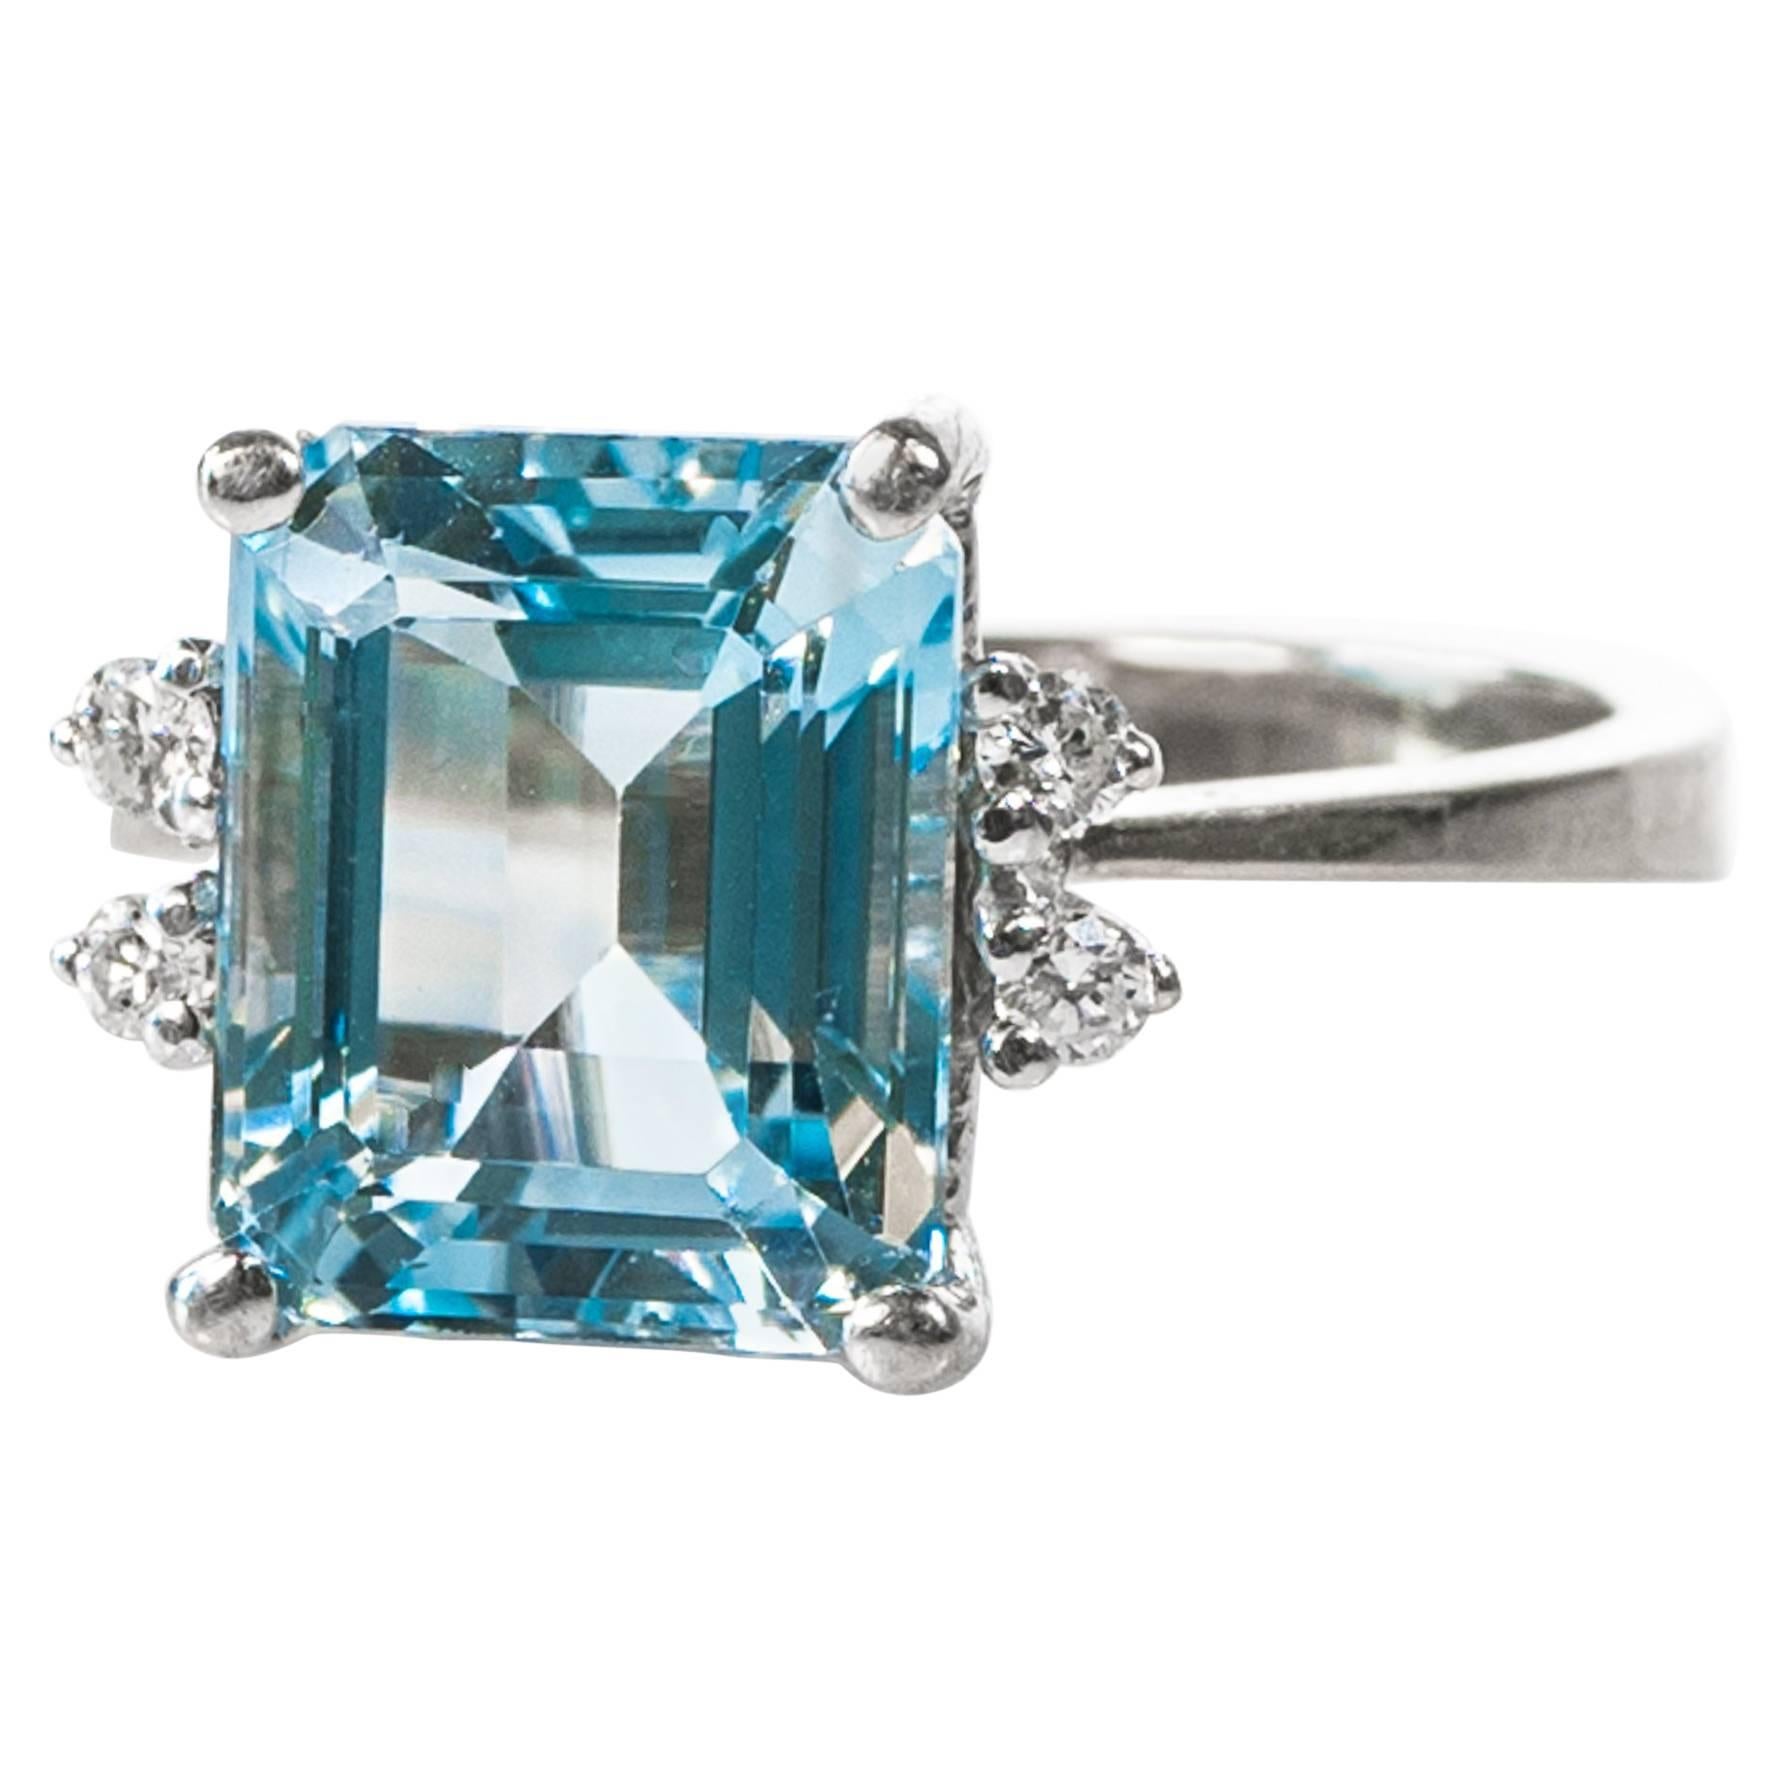 Robertson Ring - Estate Diamond Jewelry